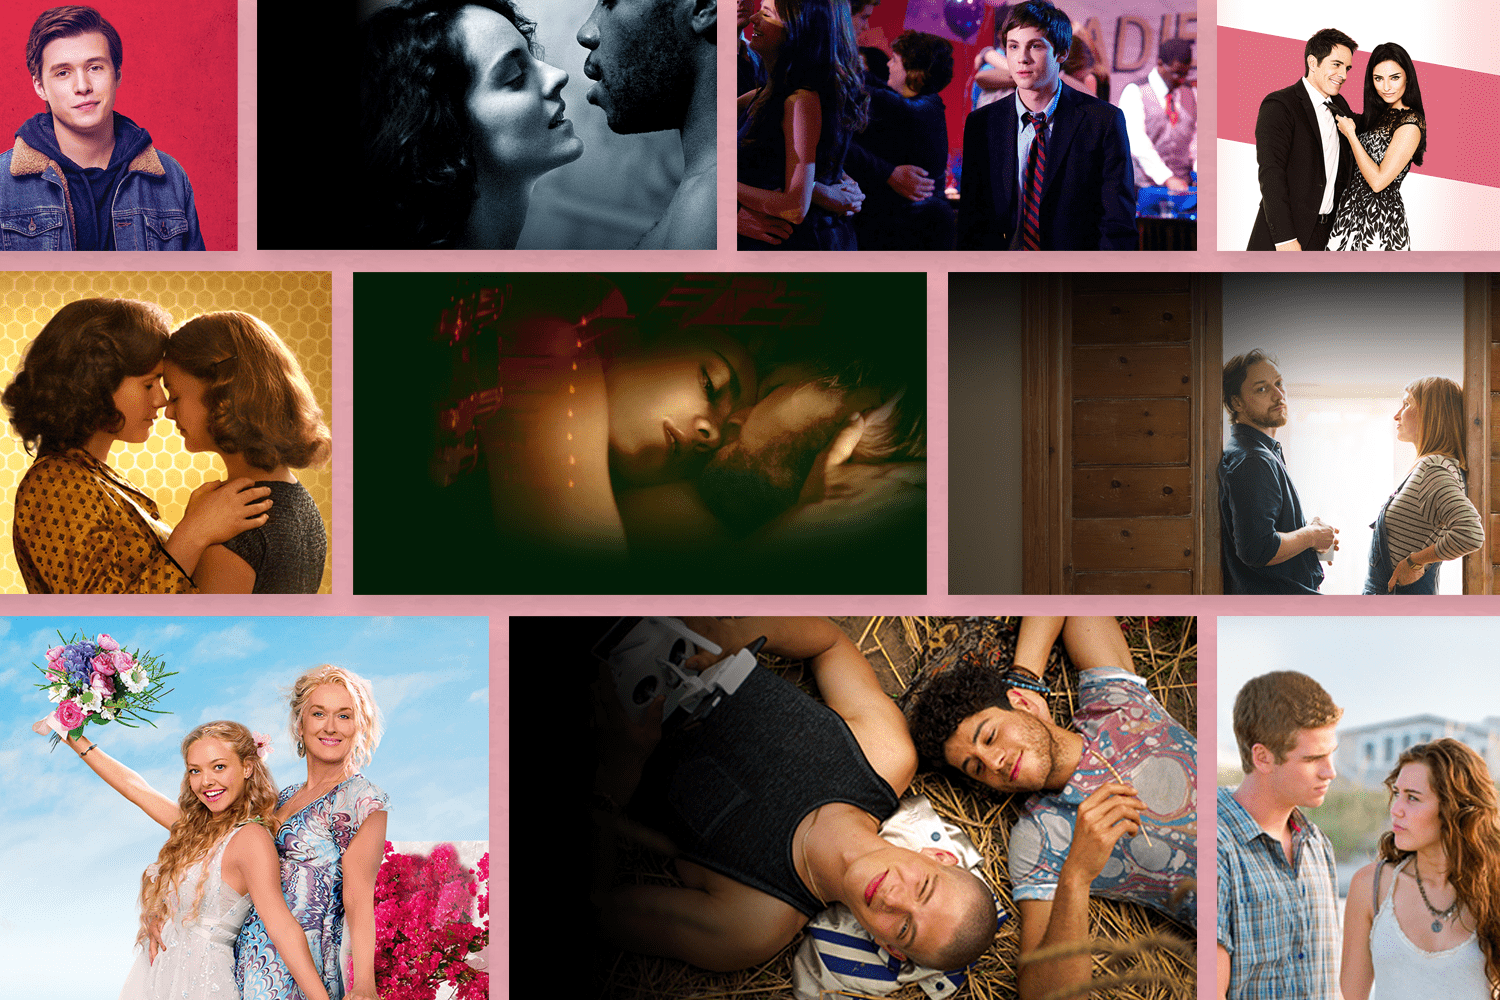 35 Best Romance Movies on Hulu to Stream in 2023